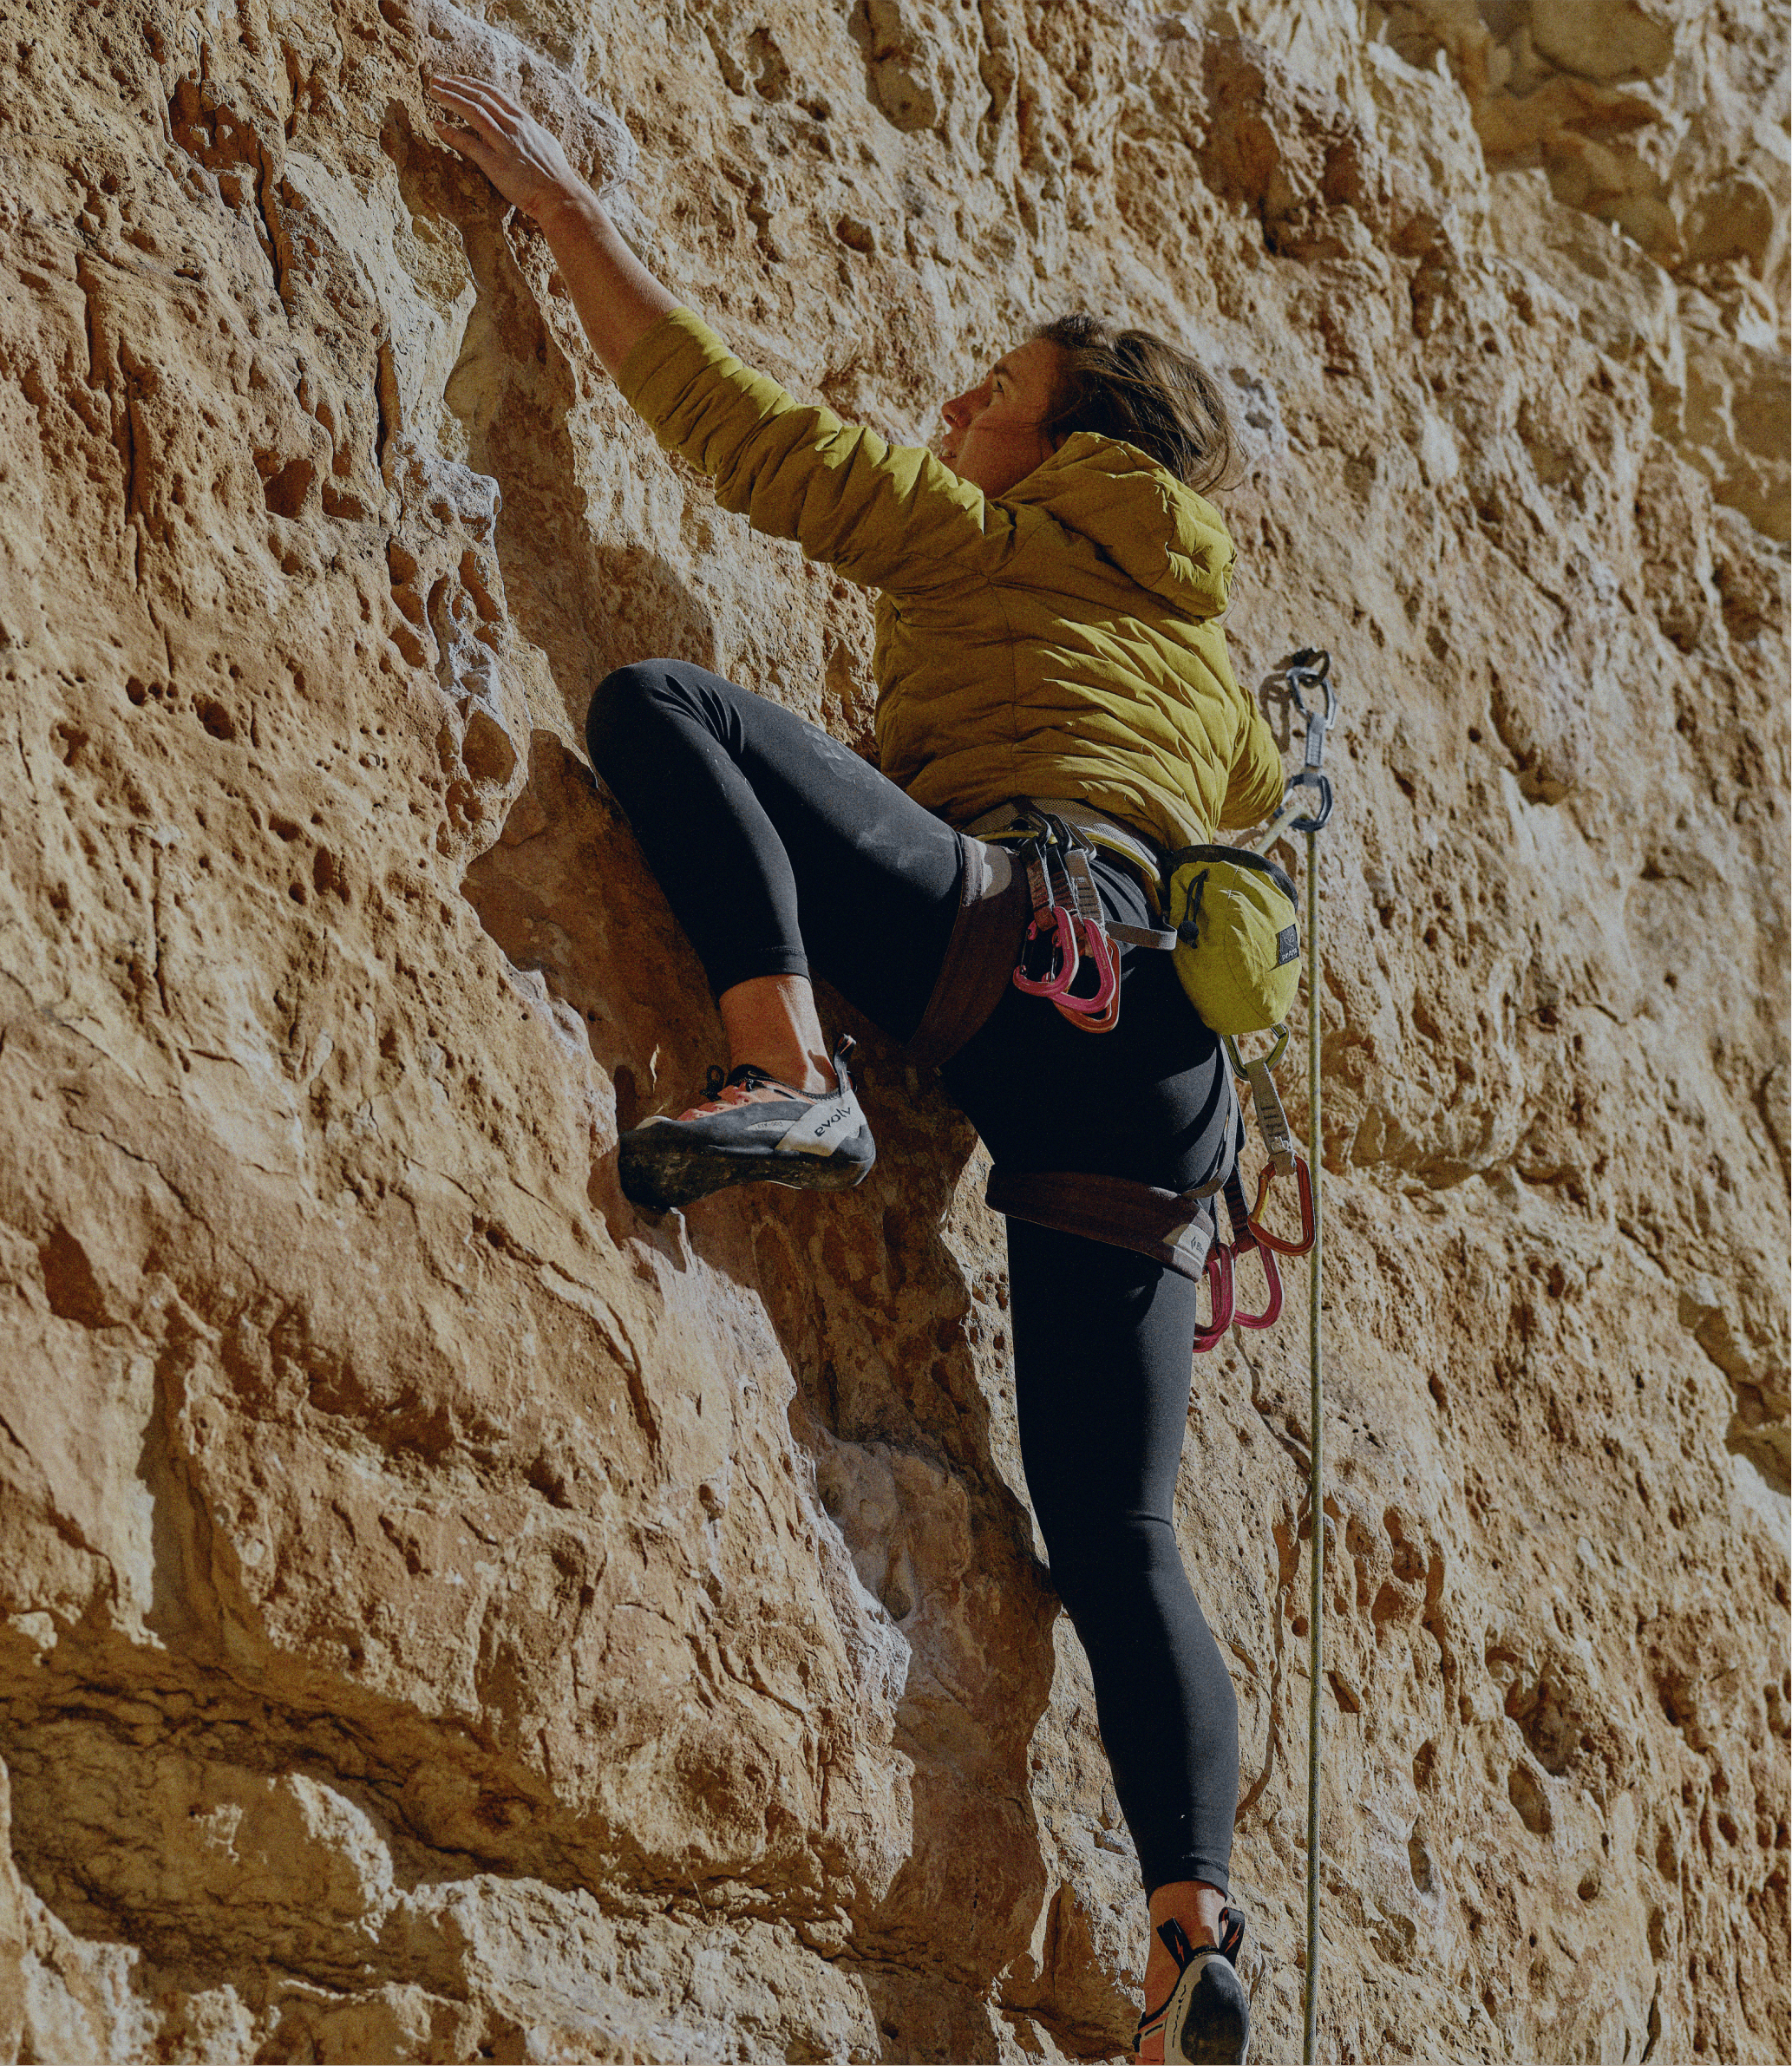 A rock climber in Evolv climbing shoes climbs outdoors.